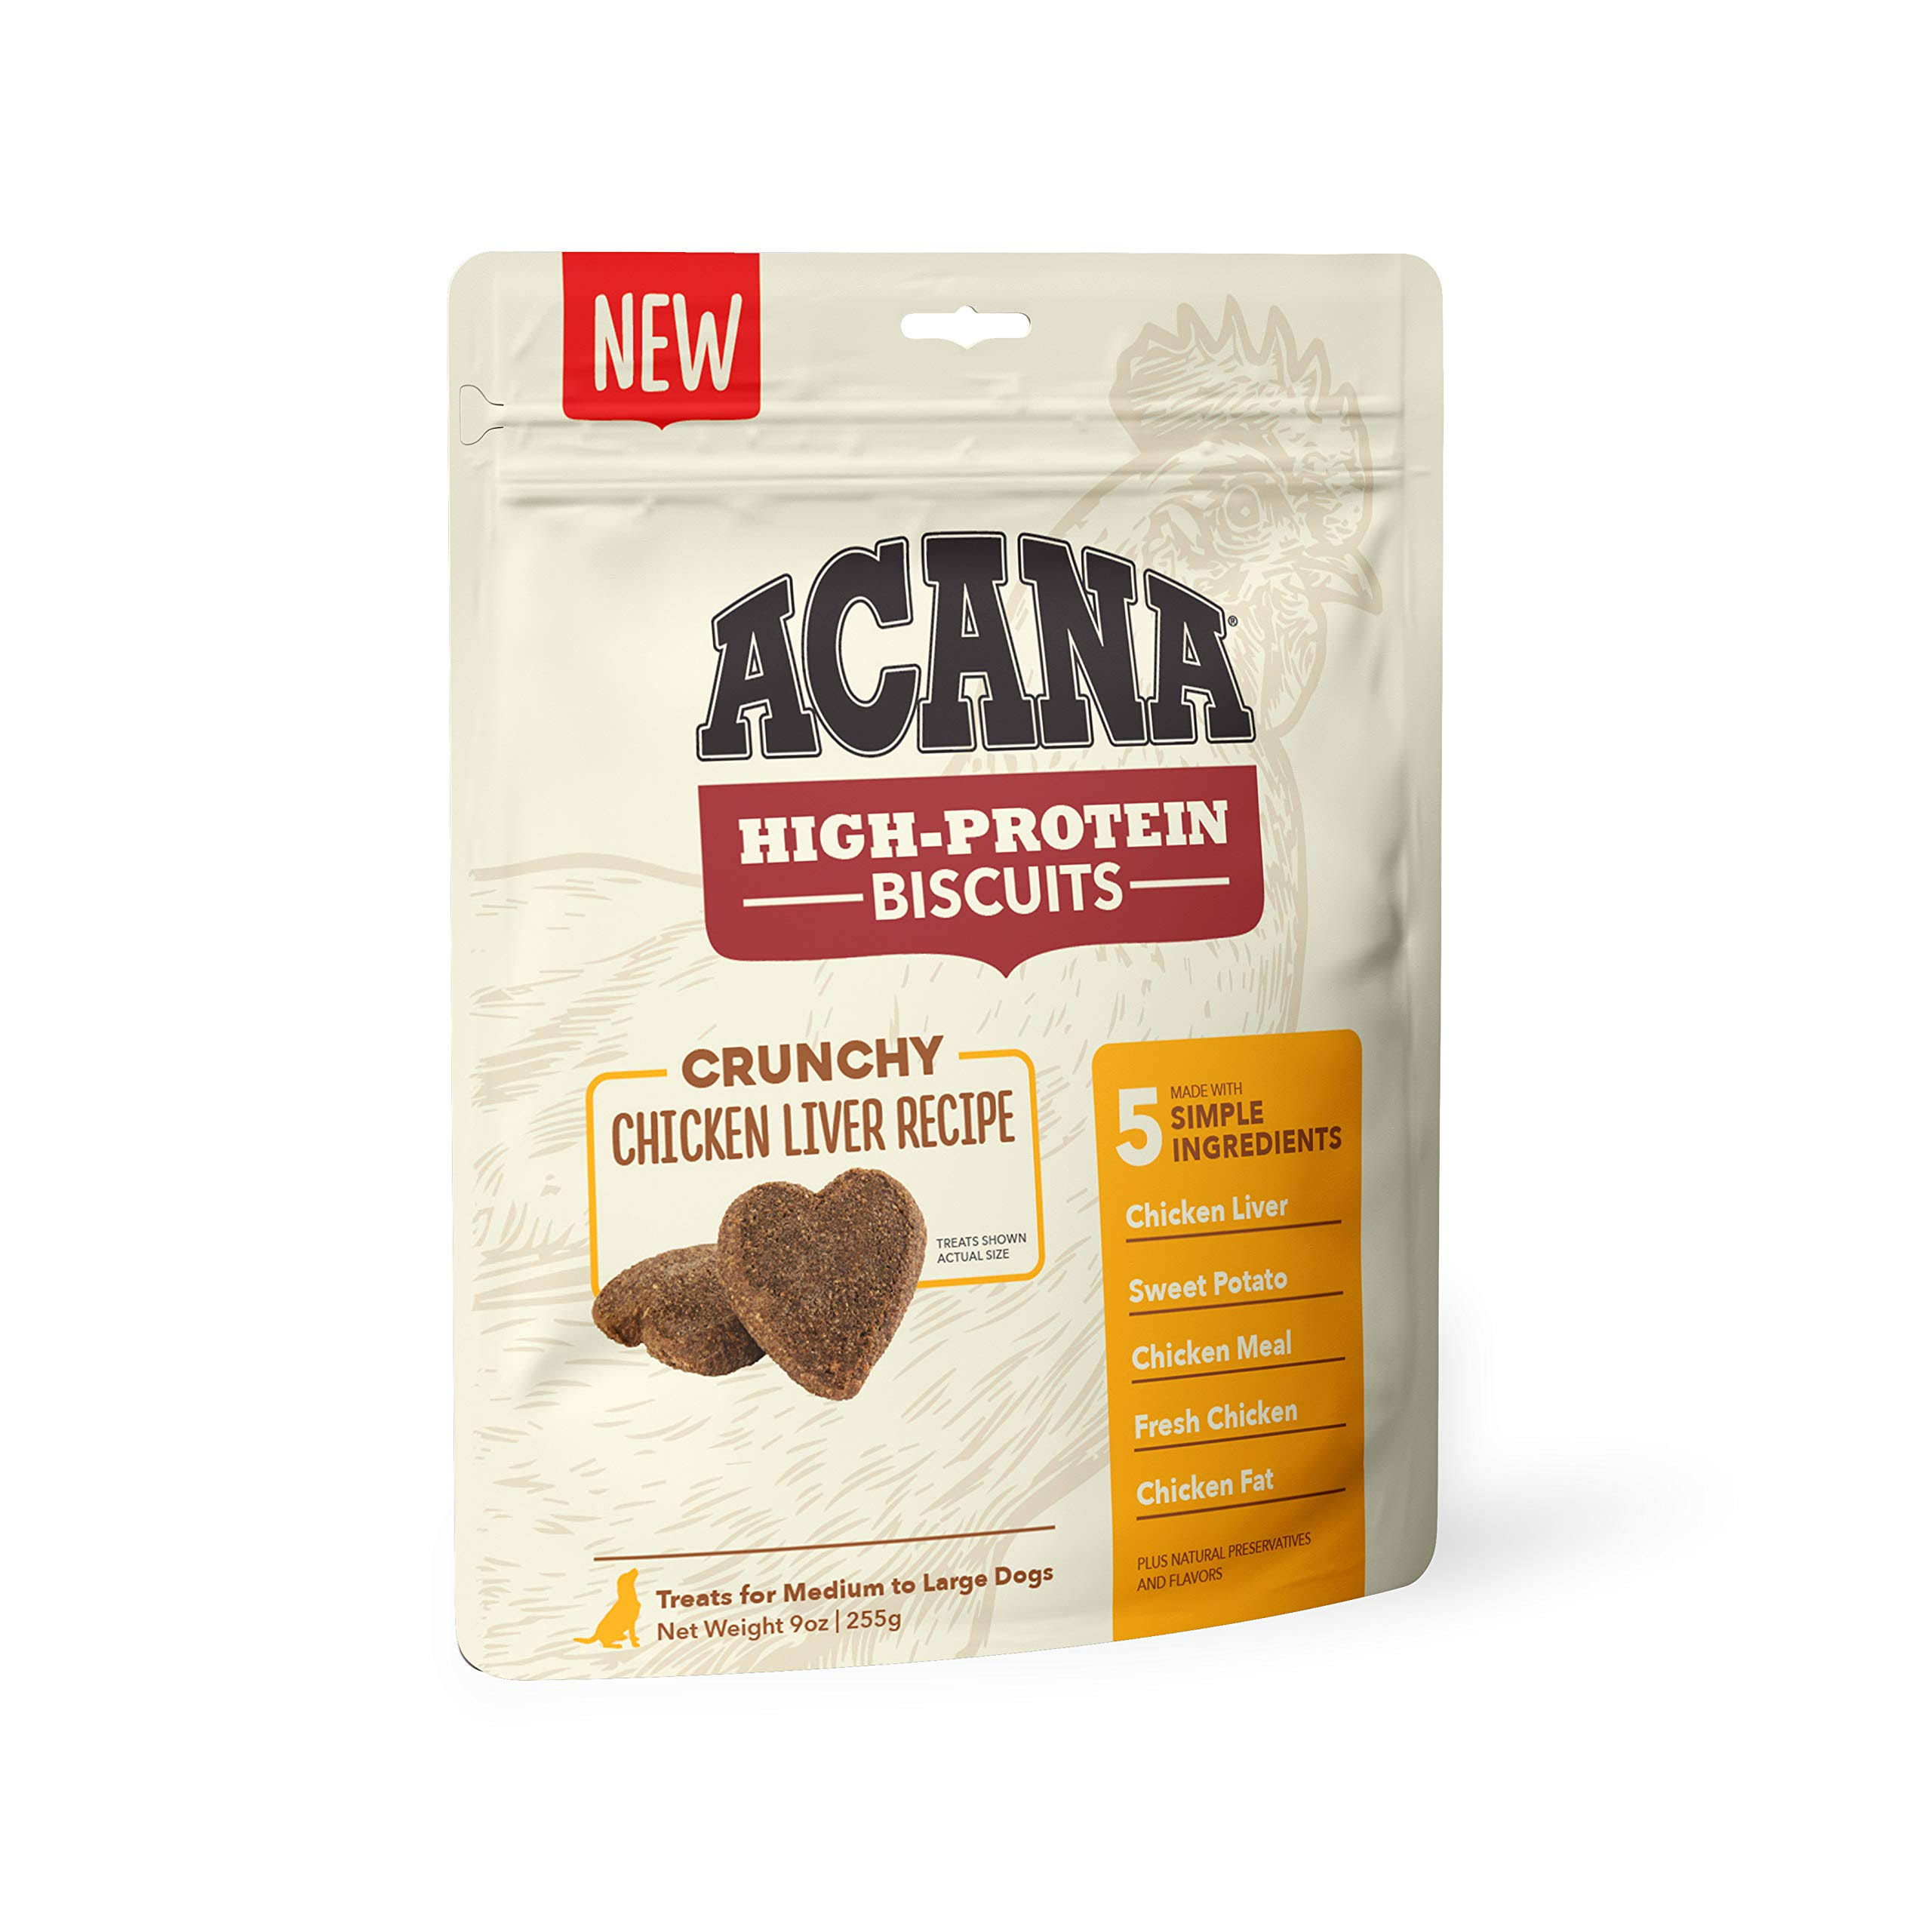 ACANA High-Protein Biscuits, Crunchy Chicken Liver Recipe - Large - 9 oz